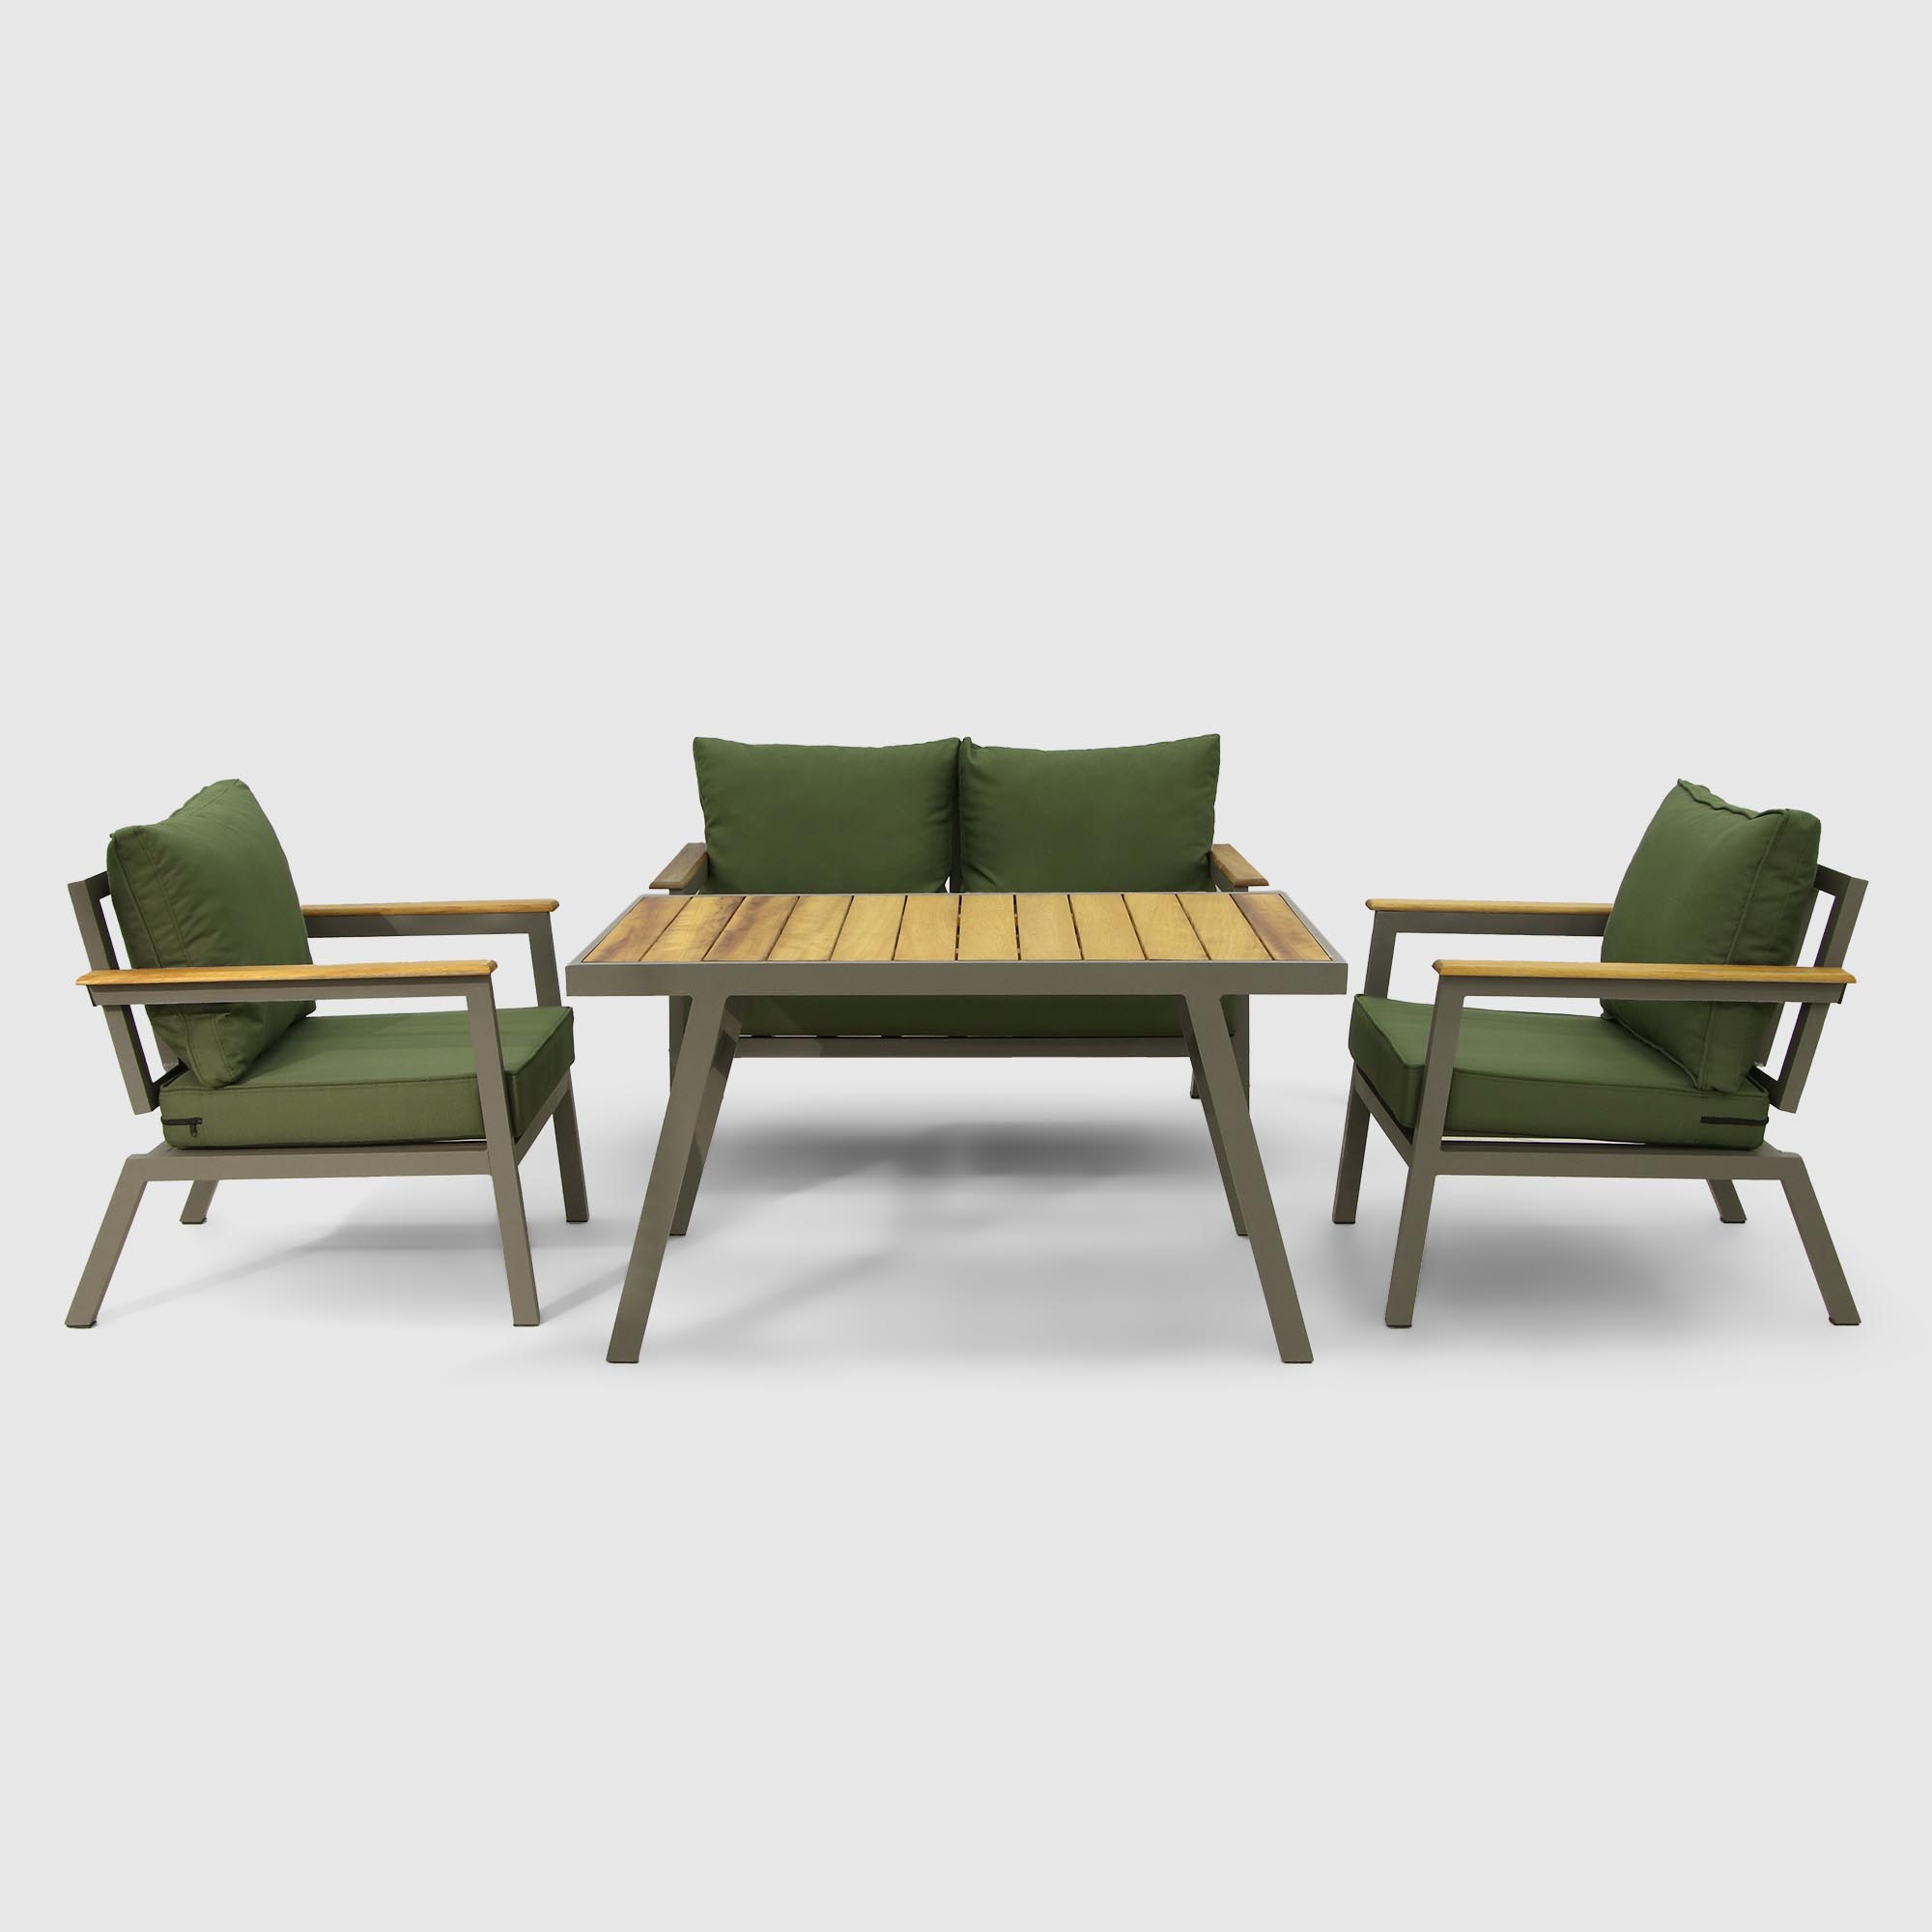 Комплект мебели Emek garden Rodos 4 предмета, цвет серый, размер 124х80х73